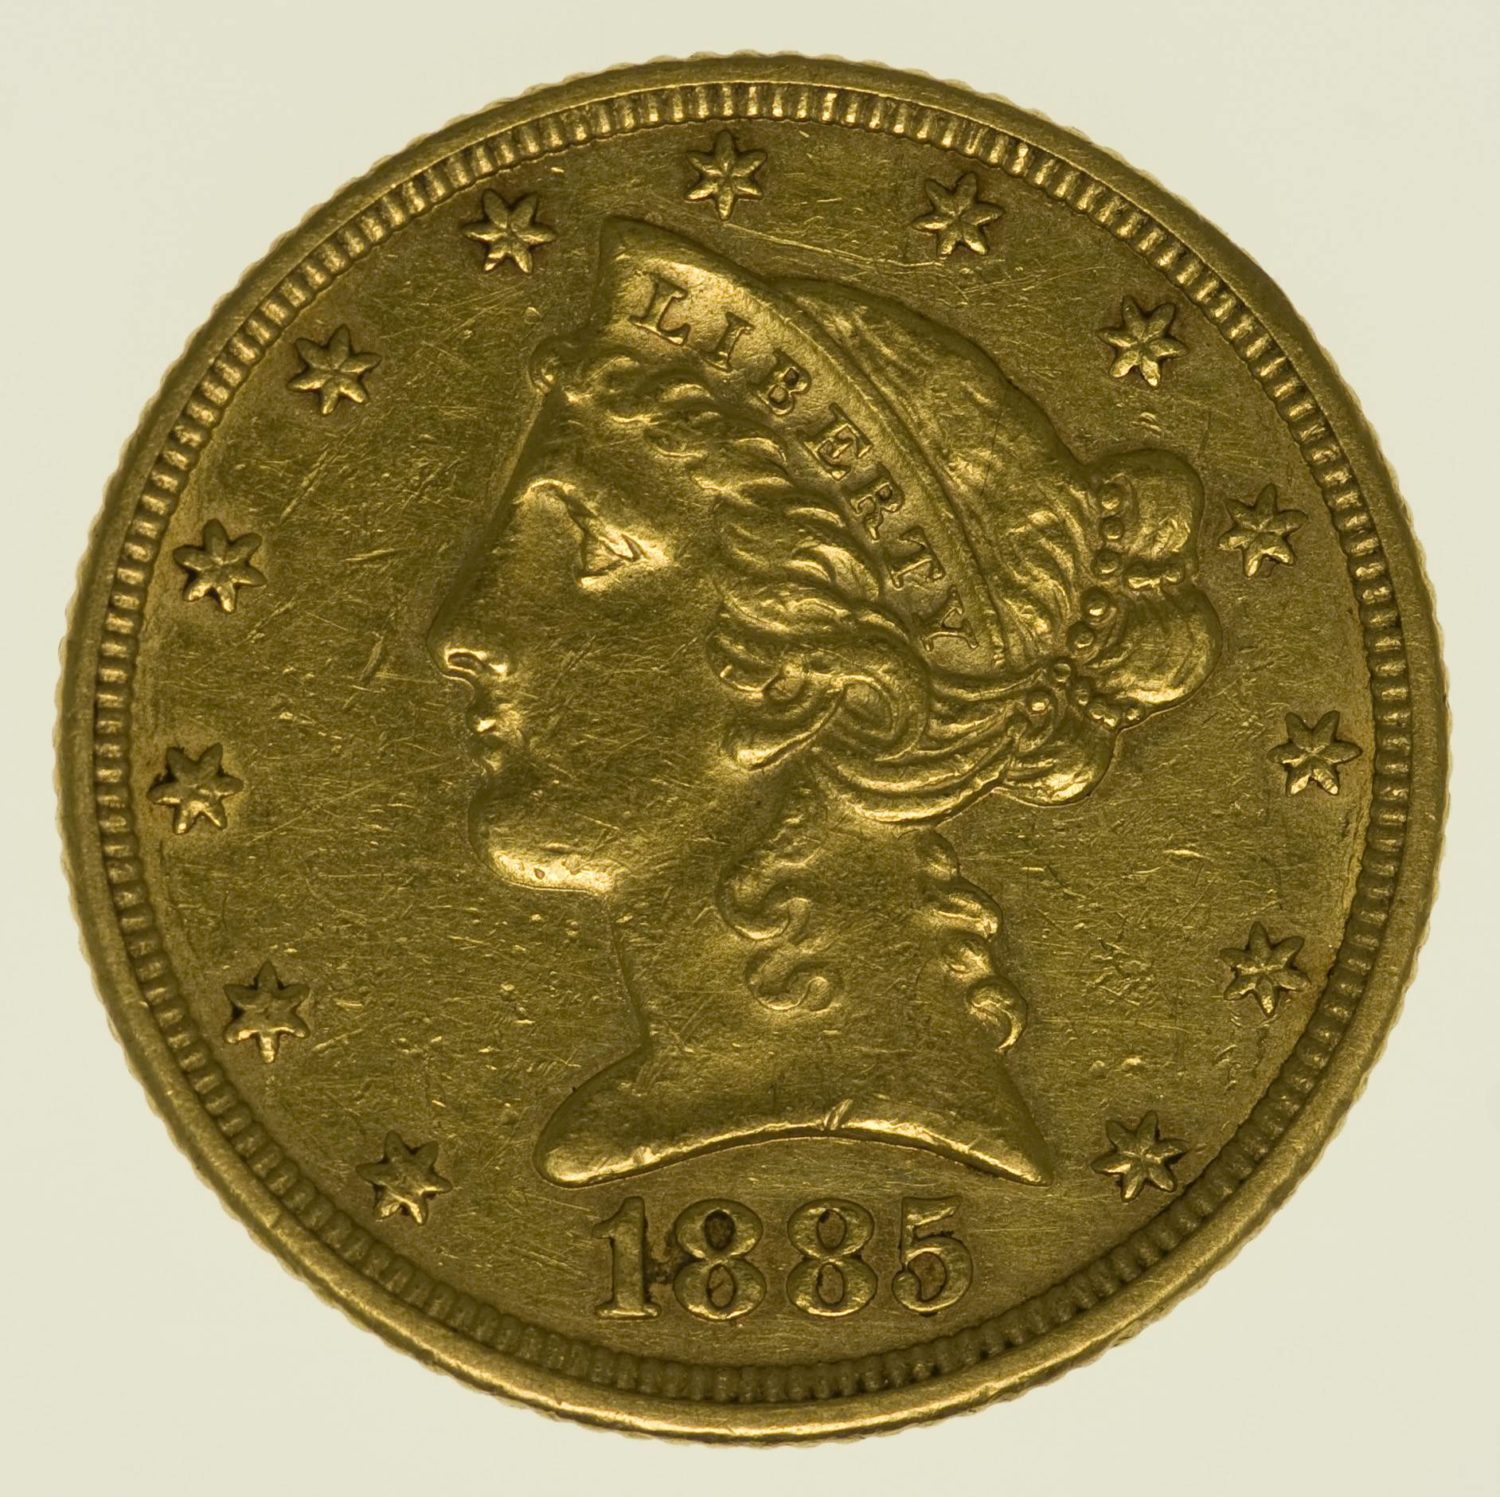 USA 5 Dollars 1885 Liberty / Kopf Gold 7,52 Gramm fein RAR